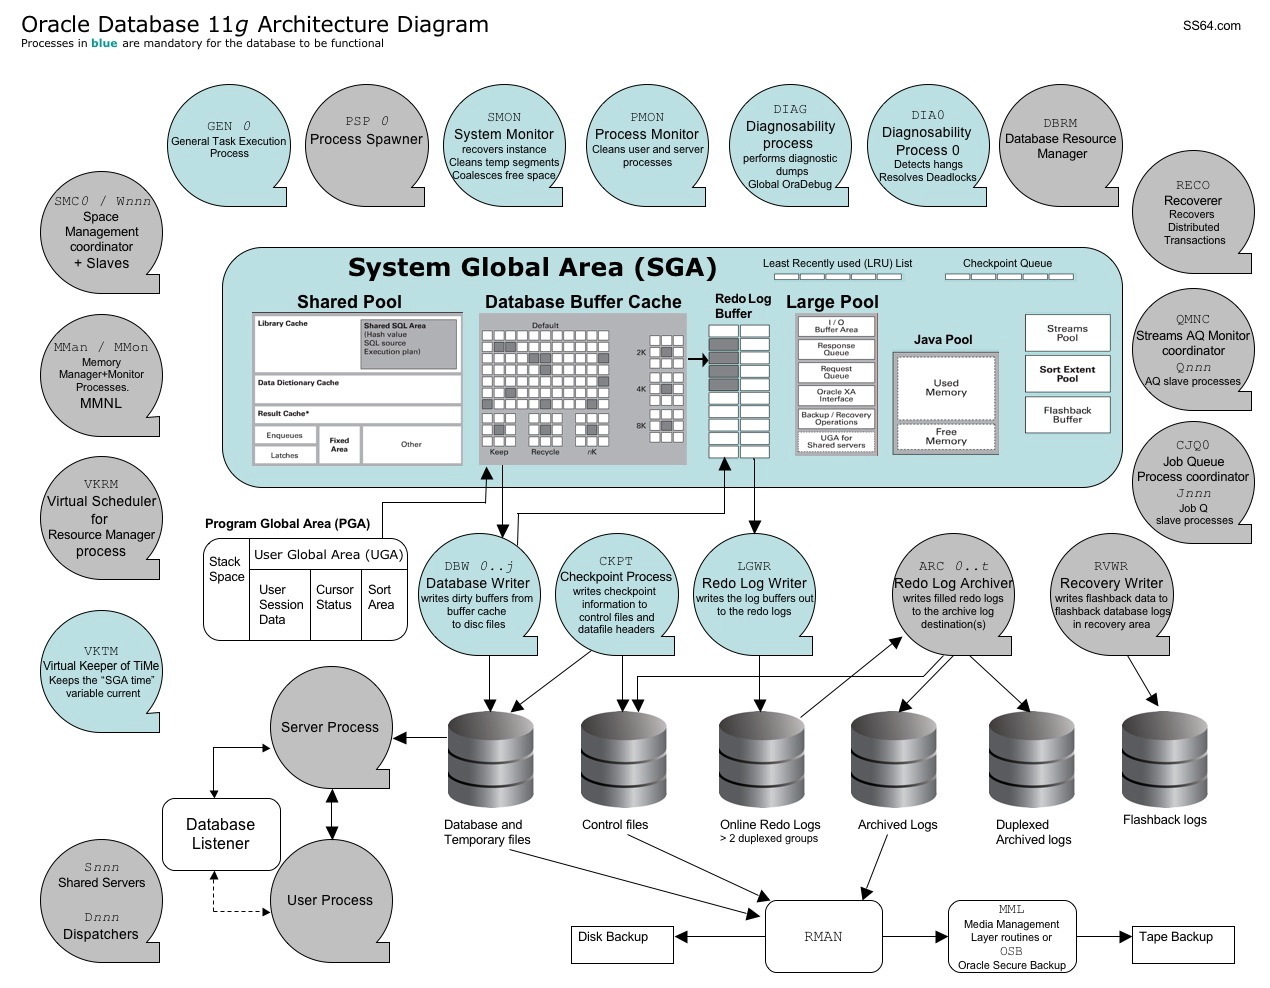 Oracle Architecture diagram